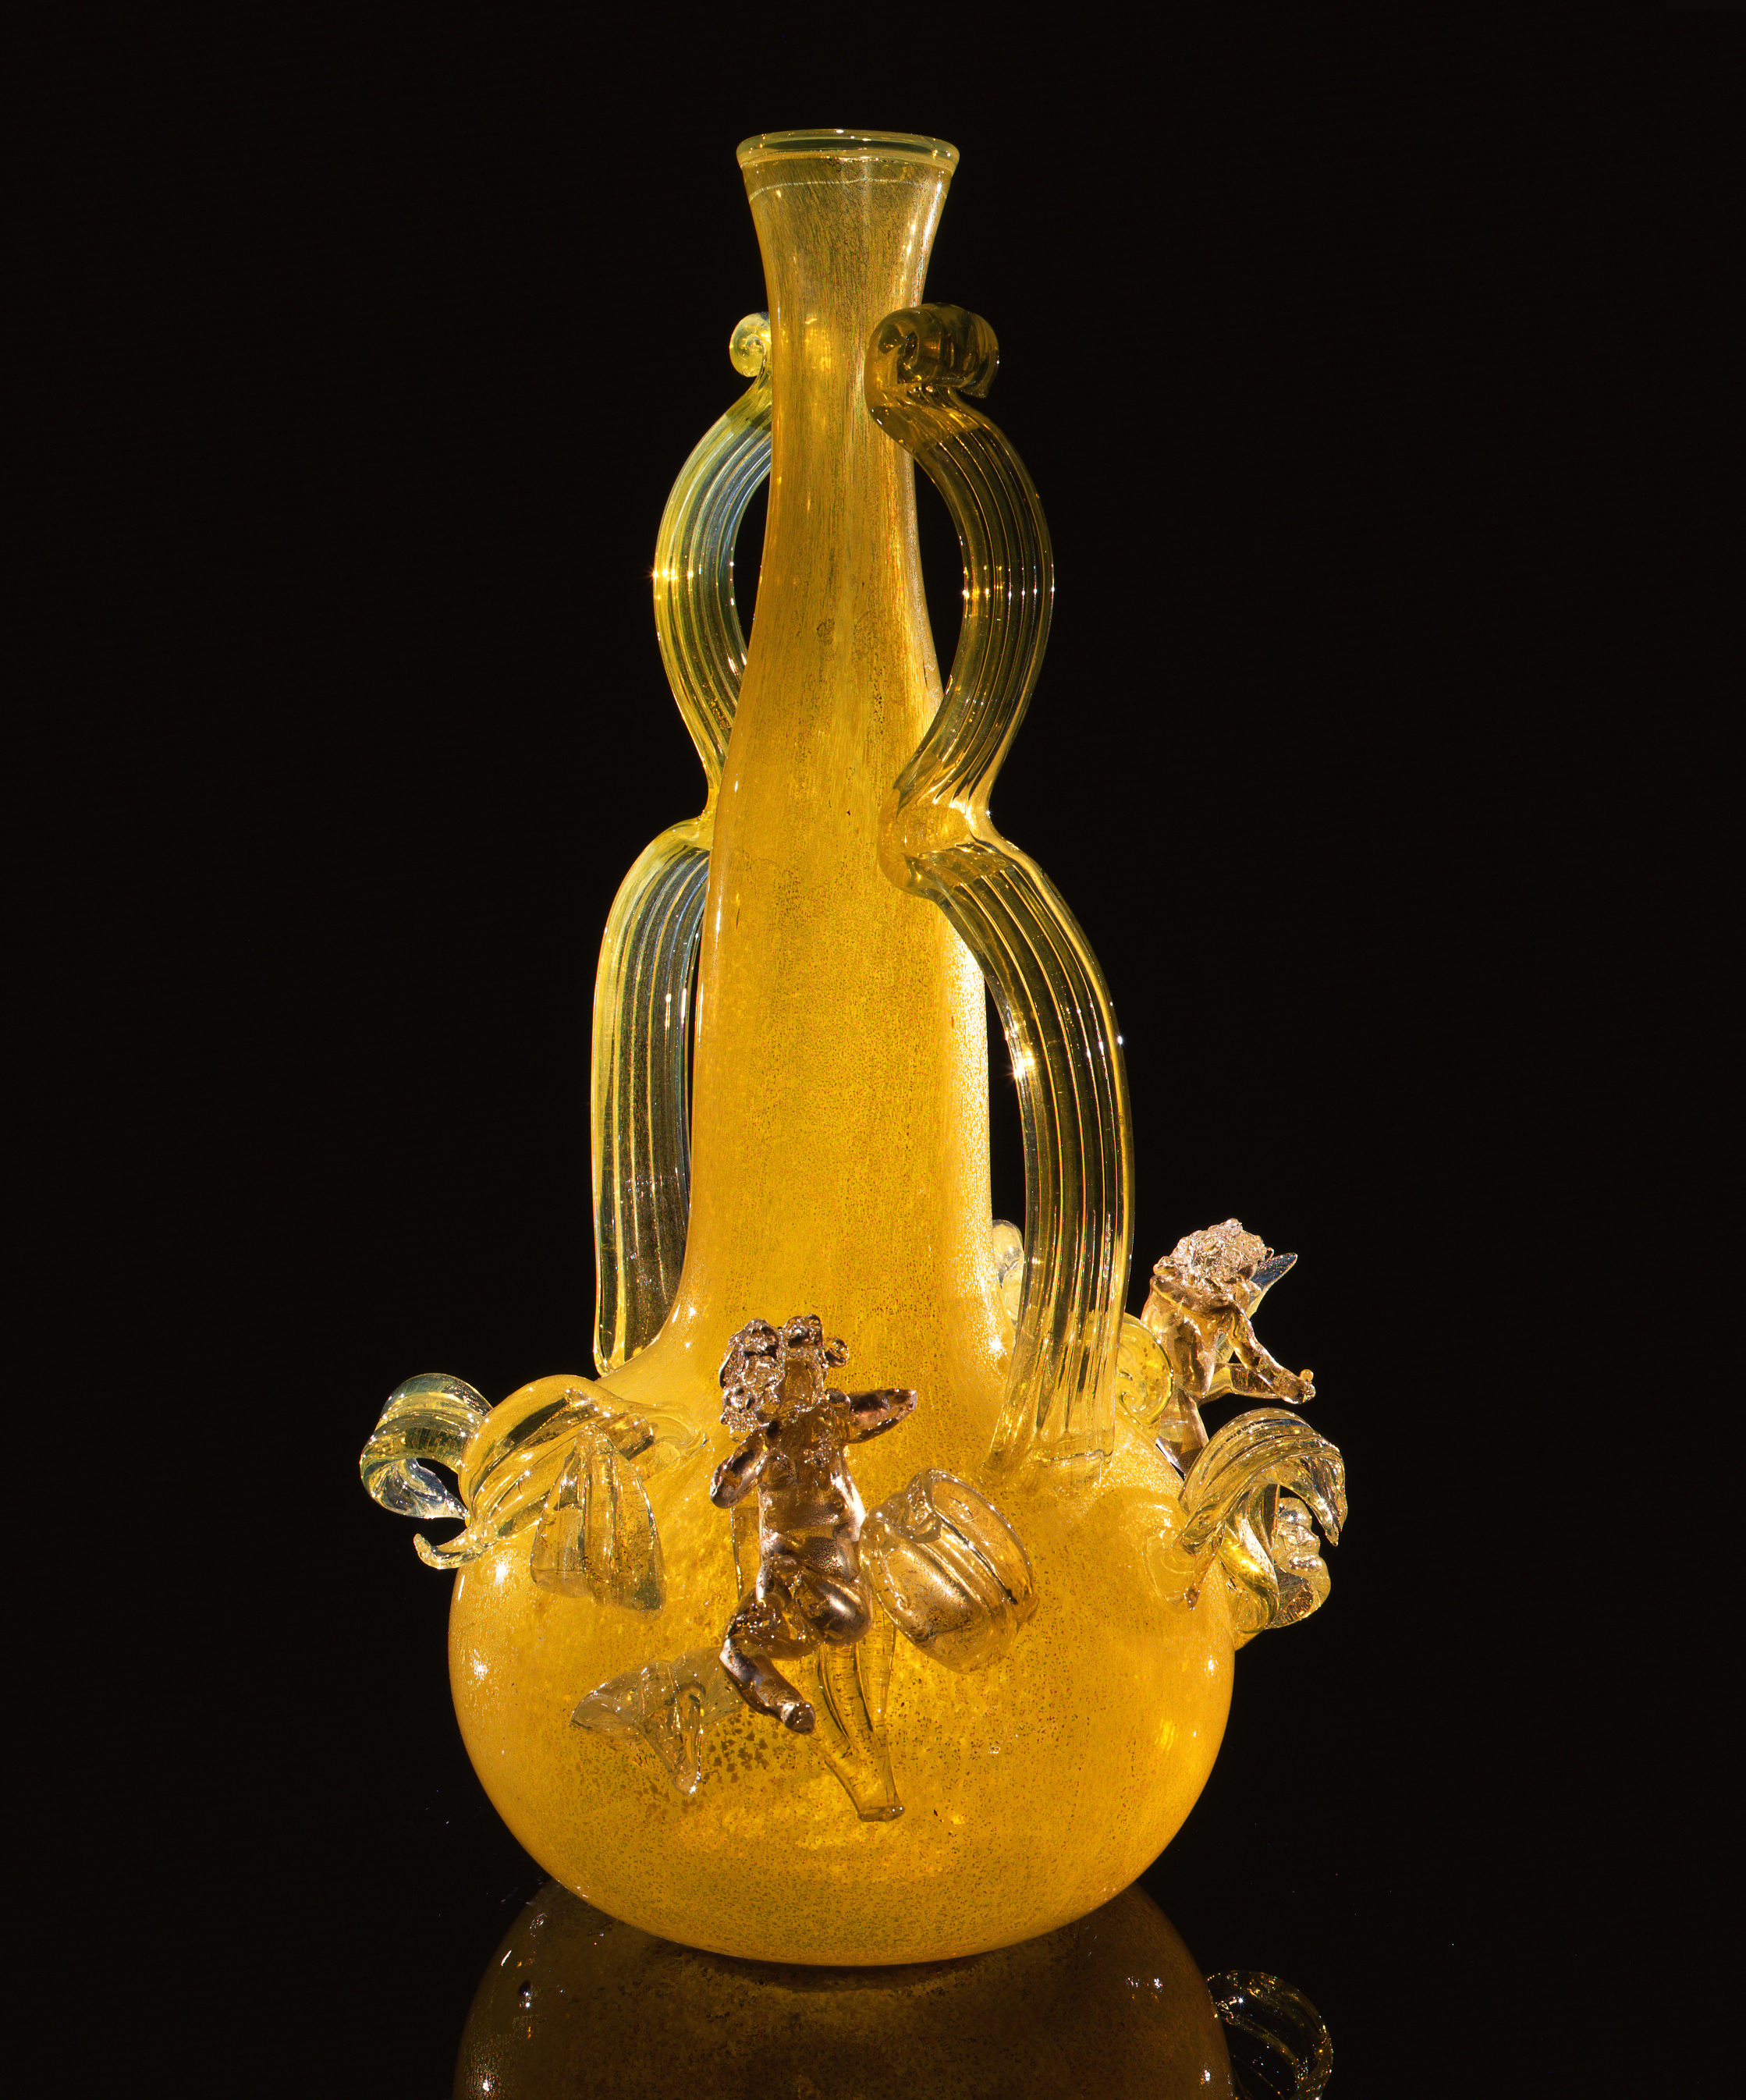  Dale Chihuly,&nbsp; Cadmium Yellow Putti Venetian&nbsp; (1993, glass, 27 x 17 x 17 inches) 